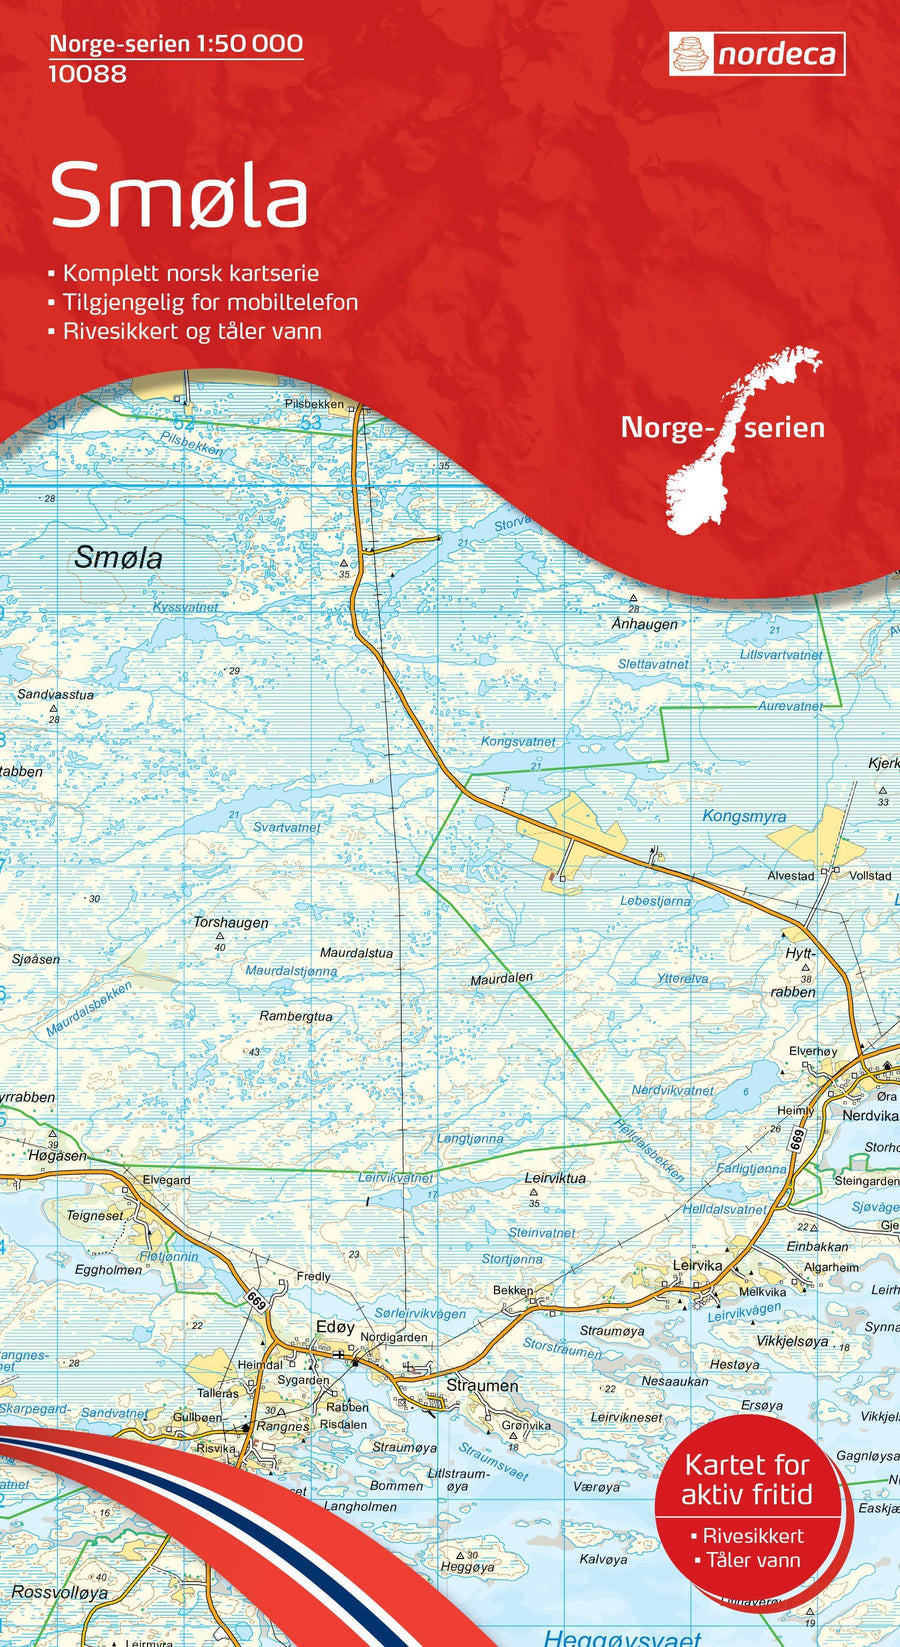 Carte de randonnée n° 10088 - Smola (Norvège) | Nordeca - Norge-serien carte pliée Nordeca 